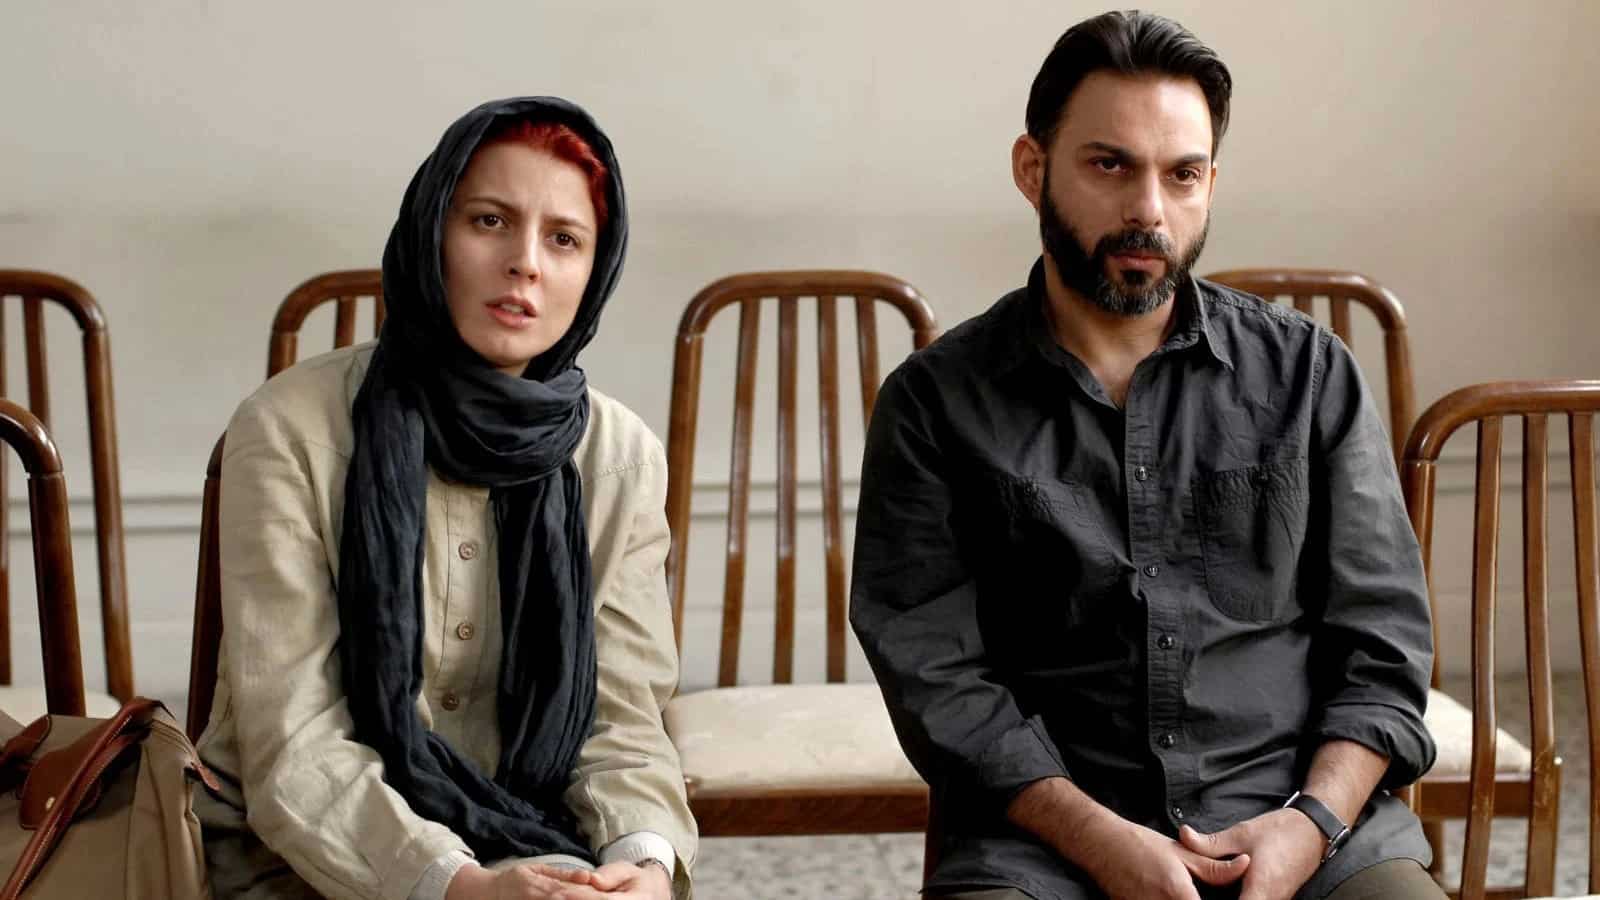 A Separation (2011) by Asghar Farhadi